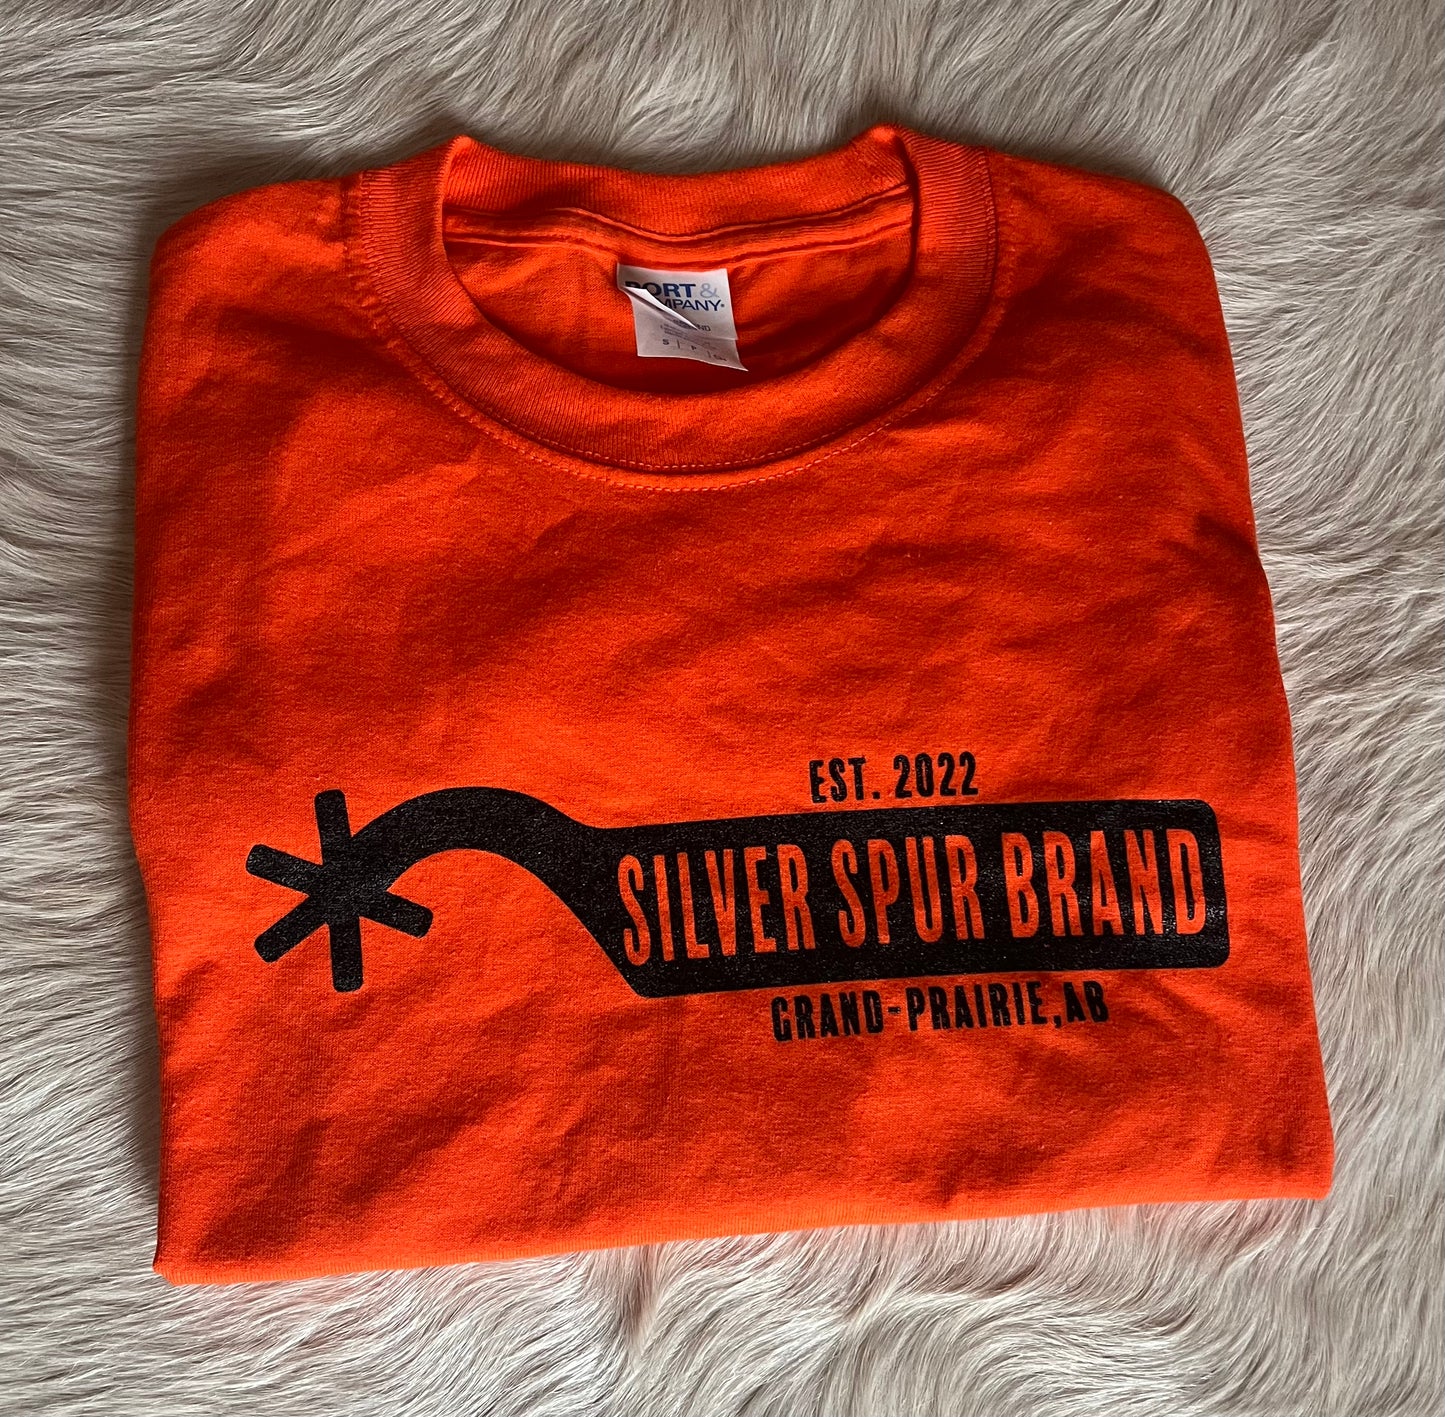 Silver Spur Brand